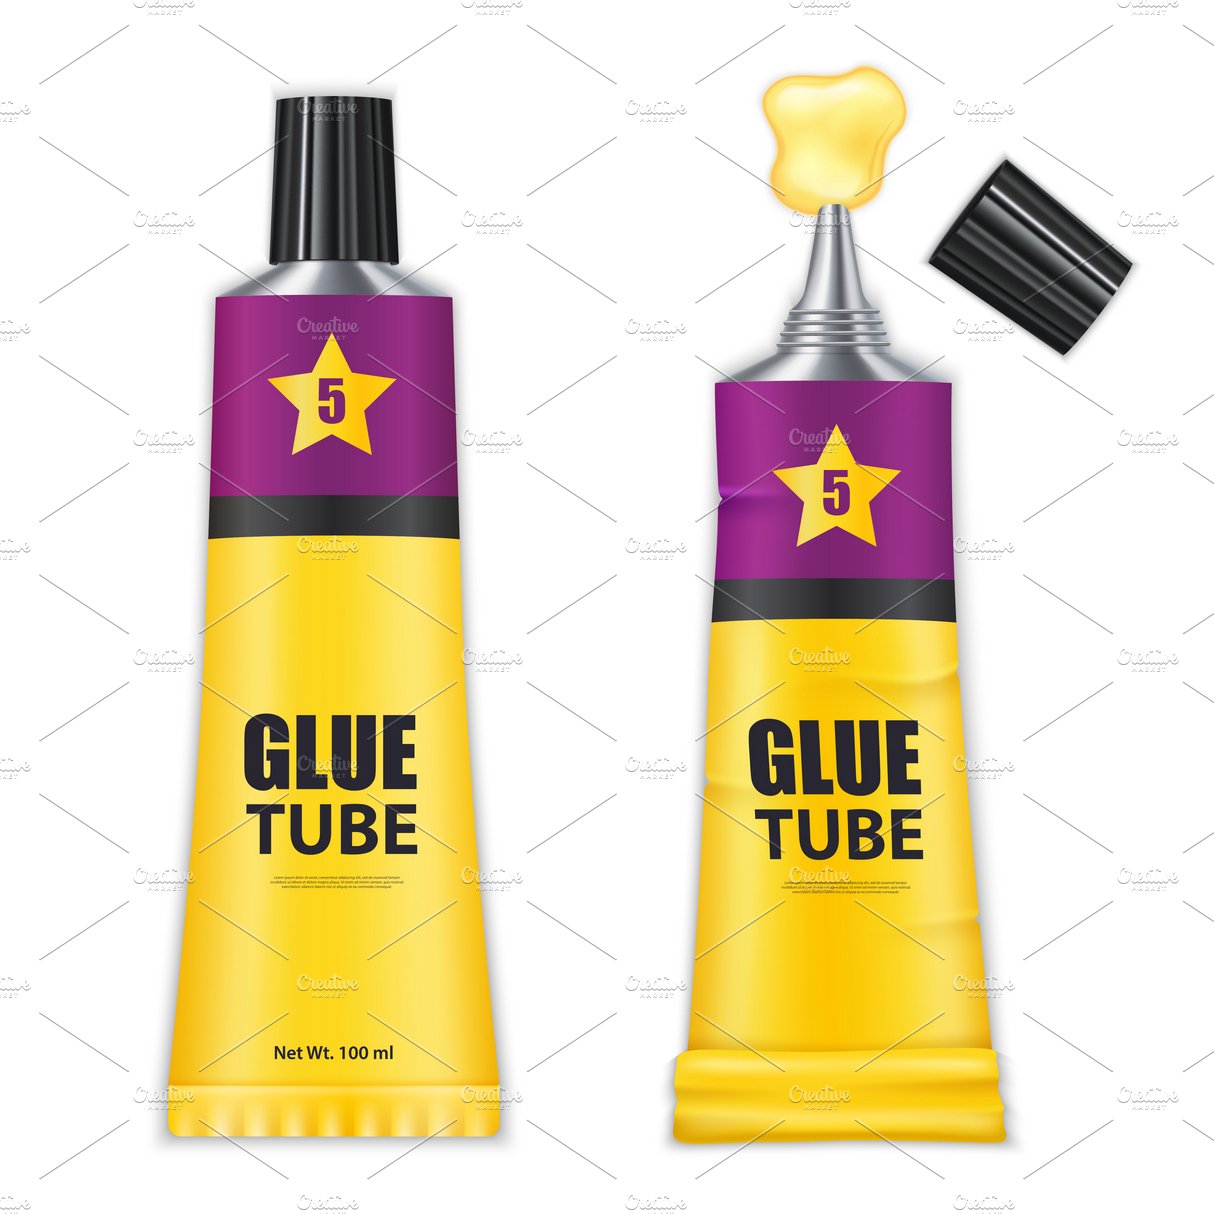 Realistic glue tubes set cover image.